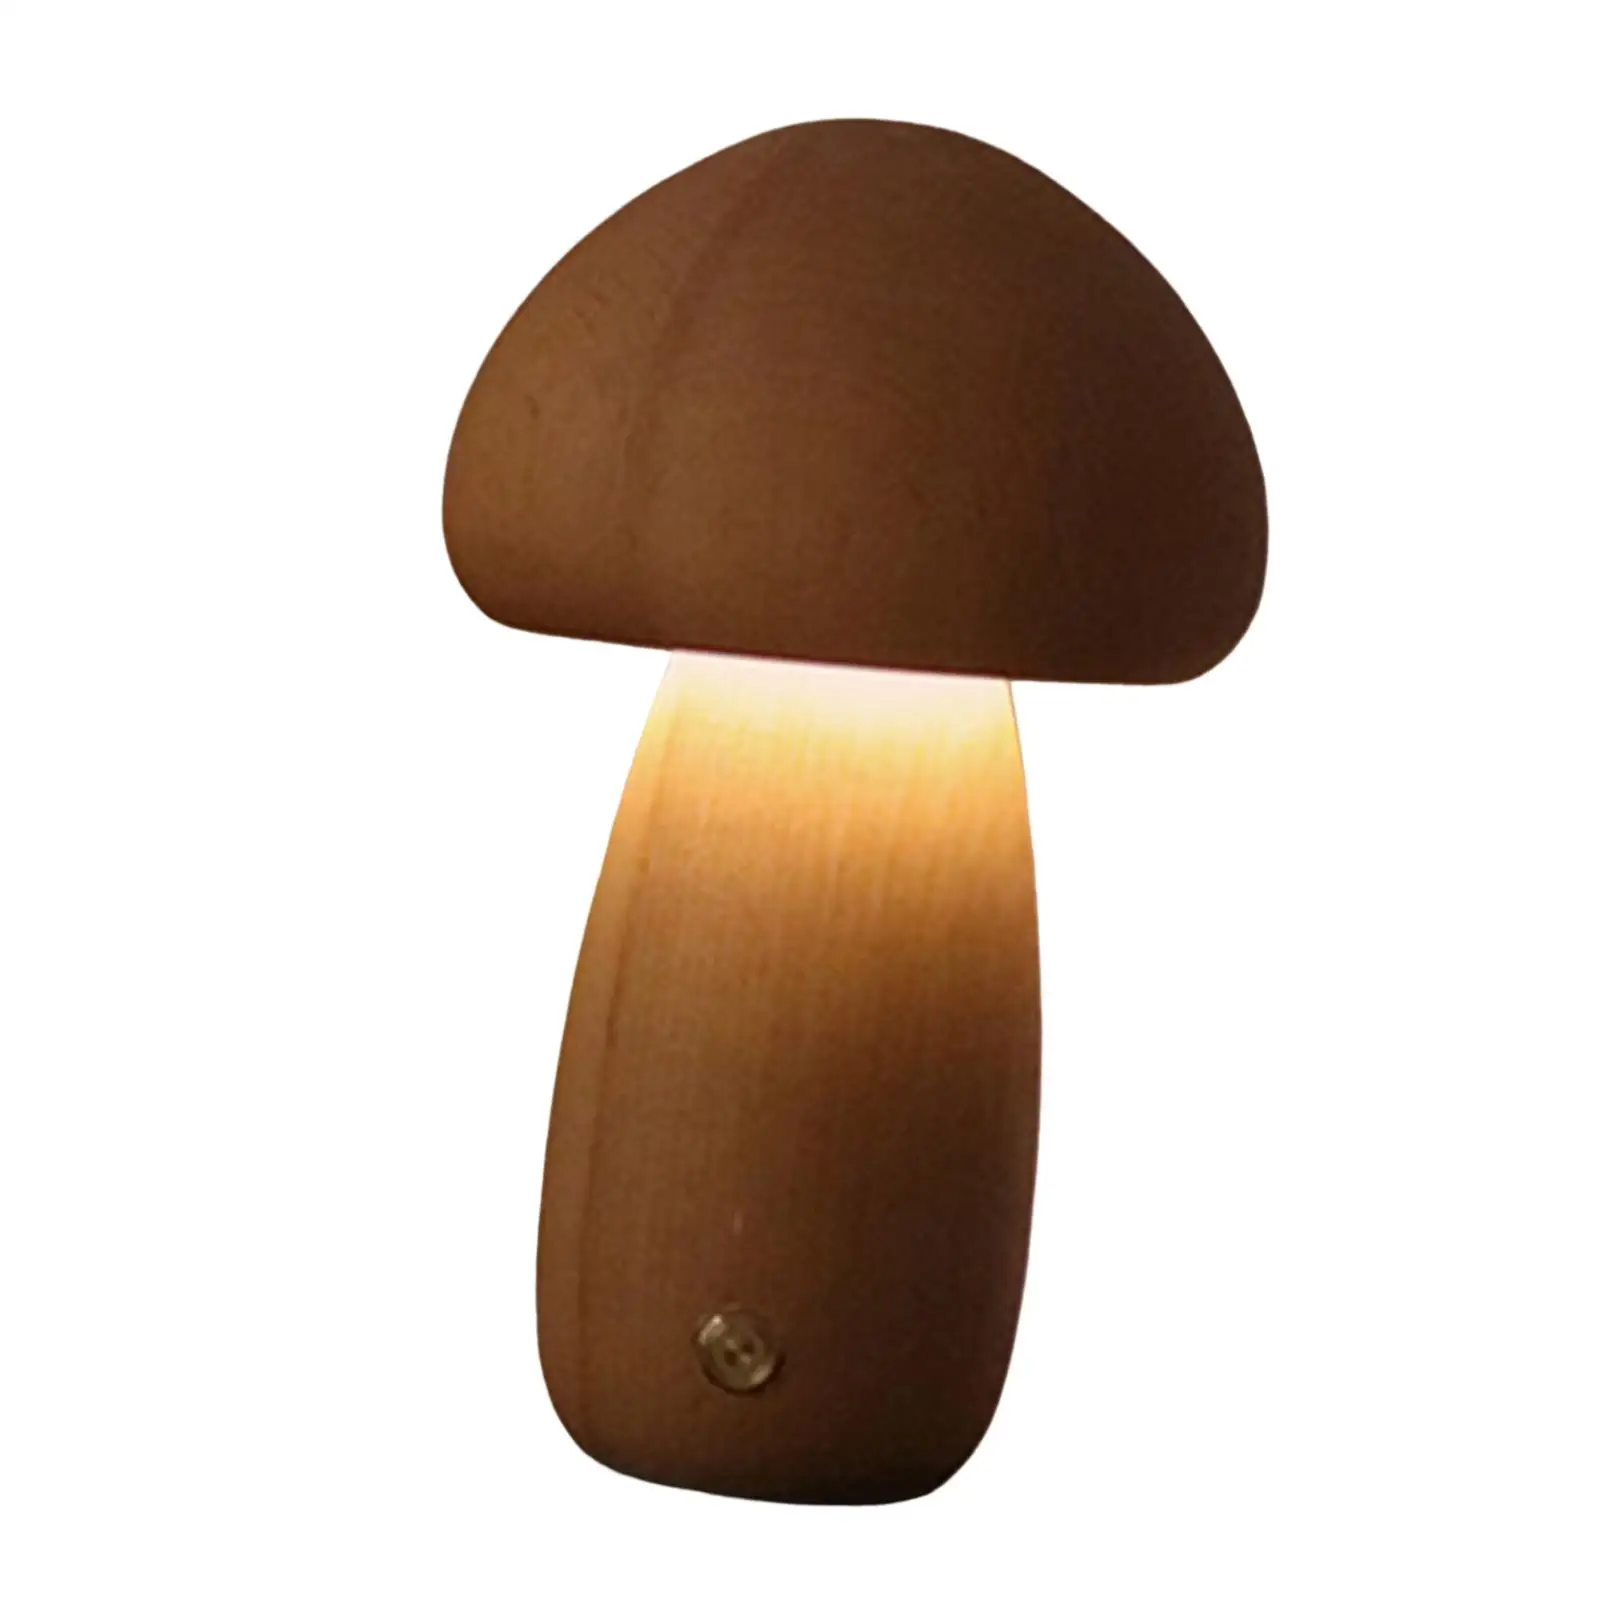 Mushroom Table Lamp Touch USB Creative Night Light Ornament Night Light for Hotel Night Reading Living Room Party Decor Bedroom